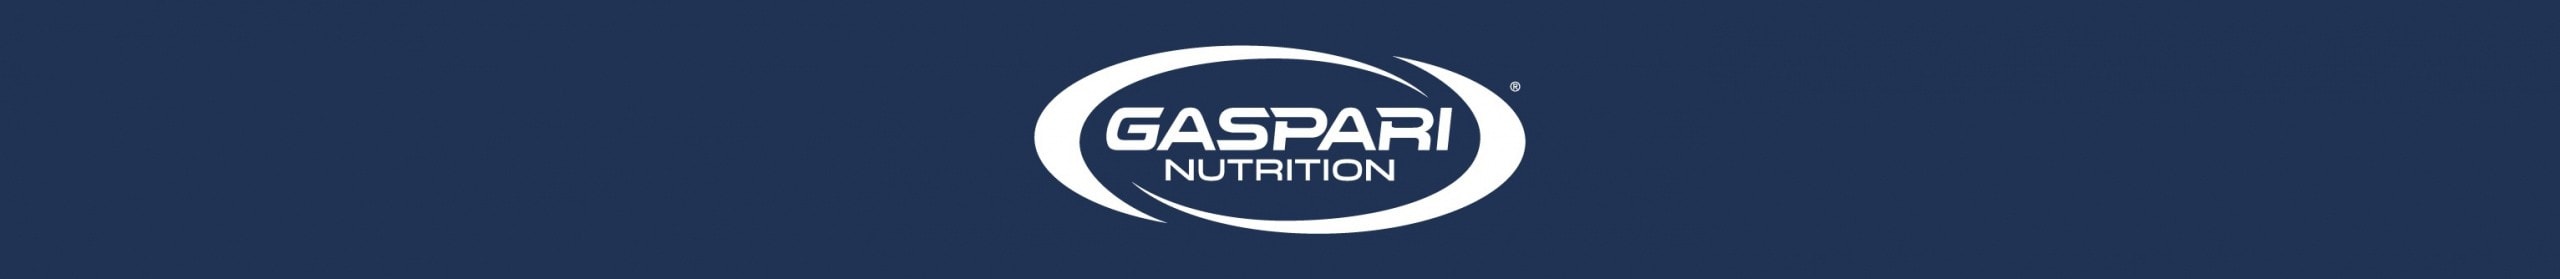 Gaspari - Real Mass (12 Lbs) - brand banners test gaspari banne scaled